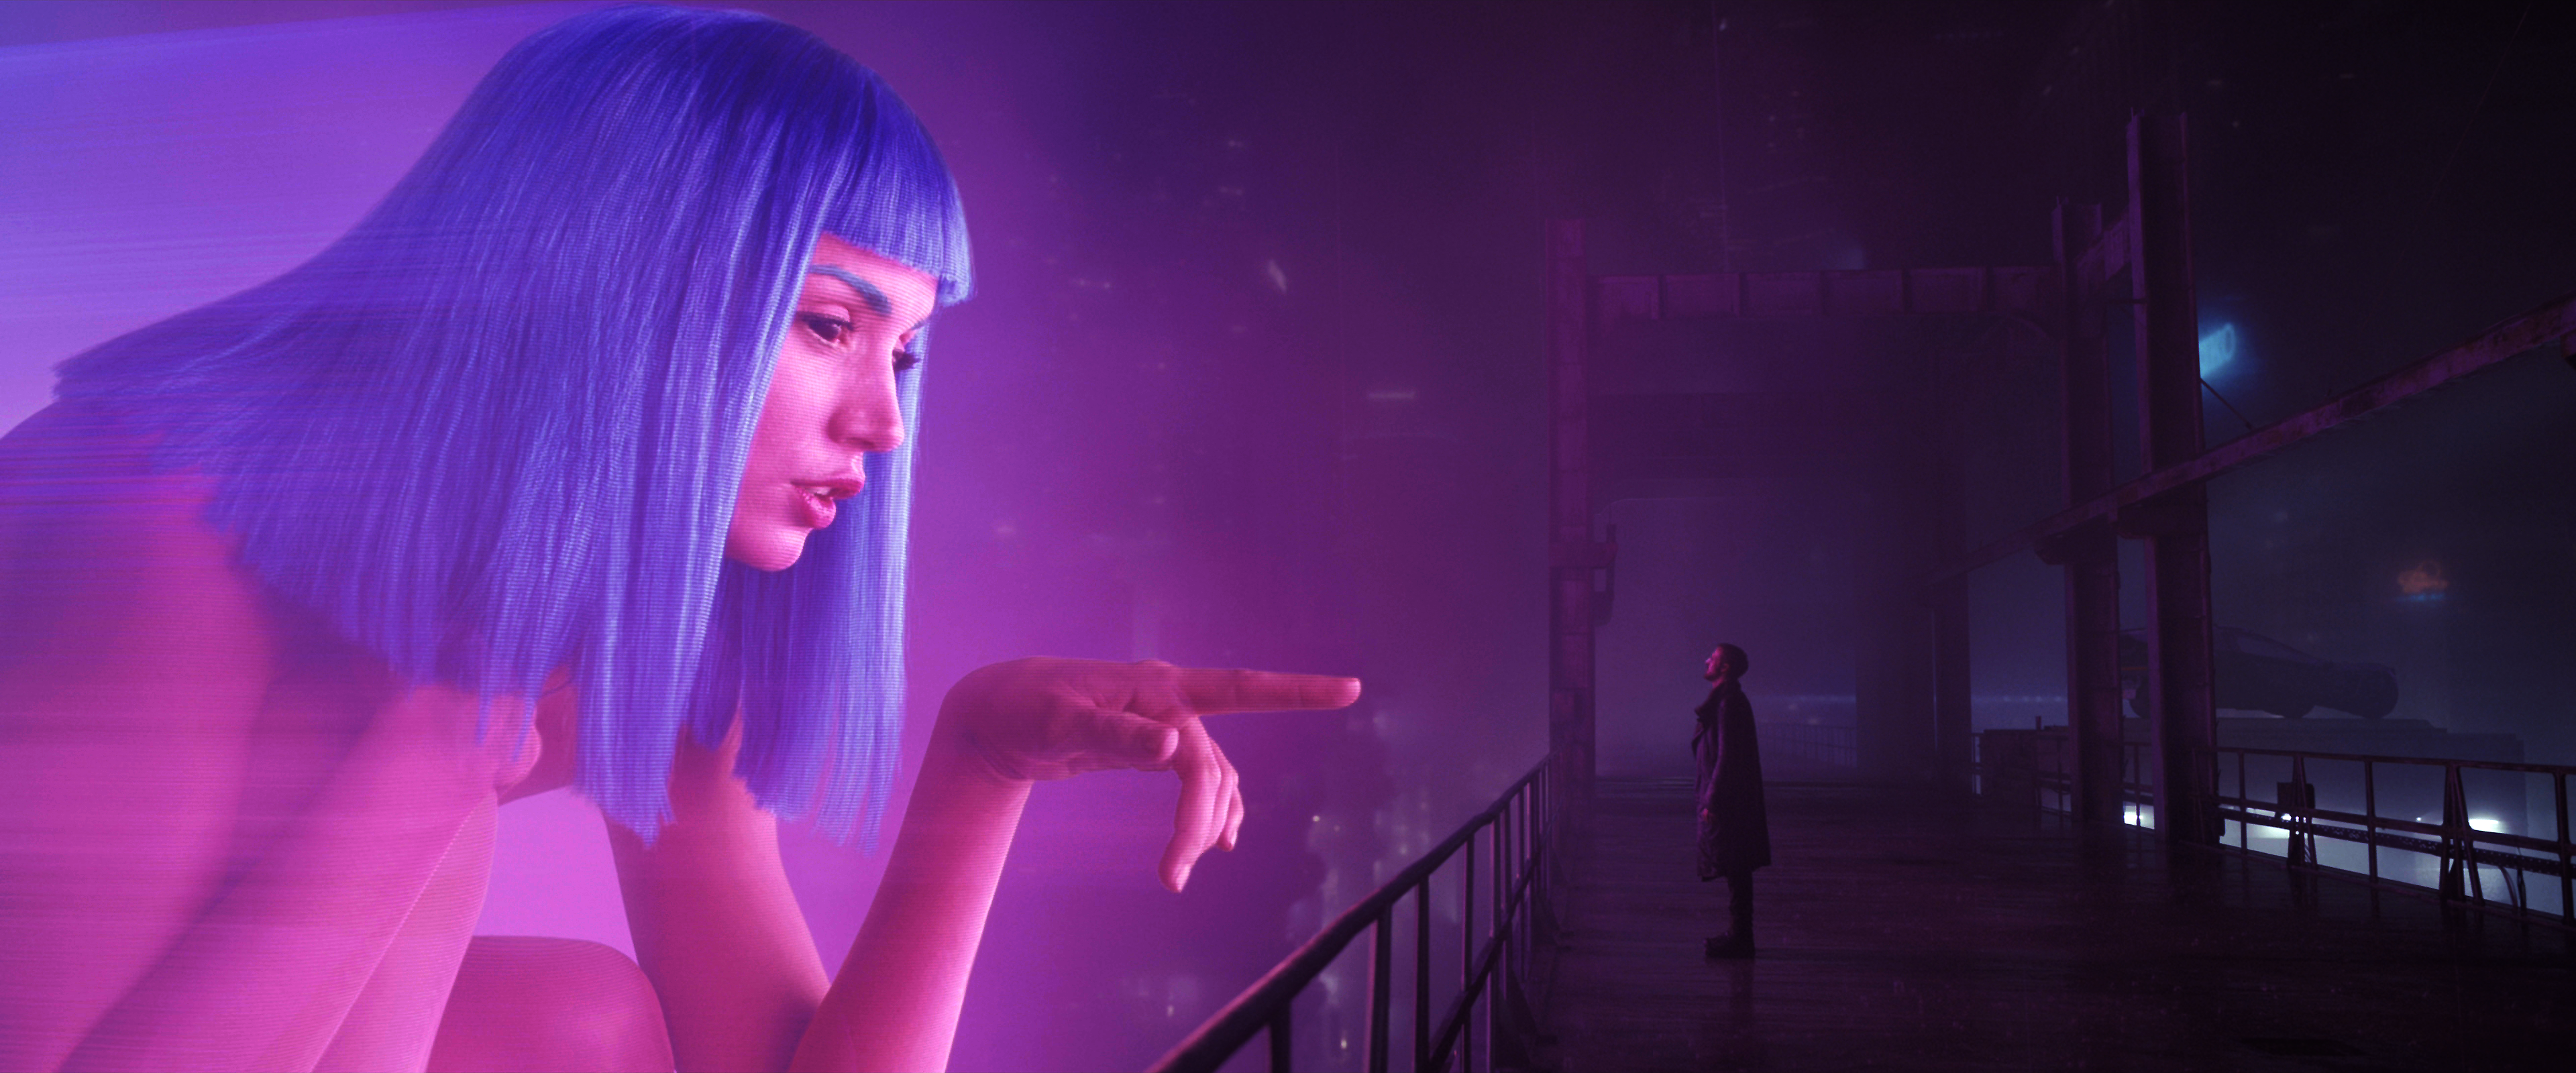 Bladerunner Blade Runner 2049 Cyberpunk Movies Ana De Armas Ryan Gosling 2019 Year Wallpaper:3840x1600